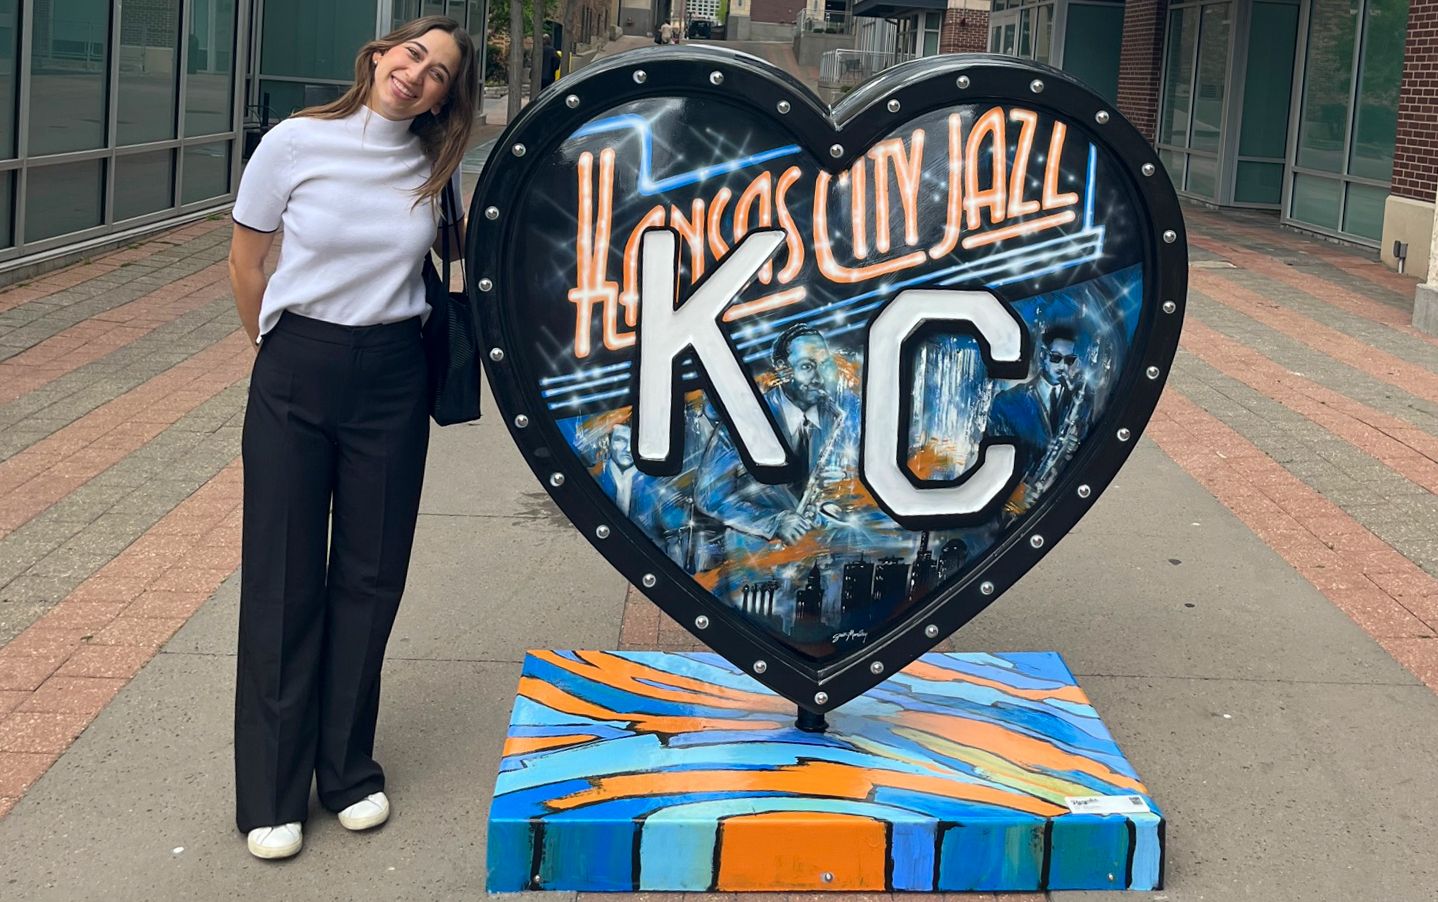 OT Student smiling next to Kansas City Jazz heart sign